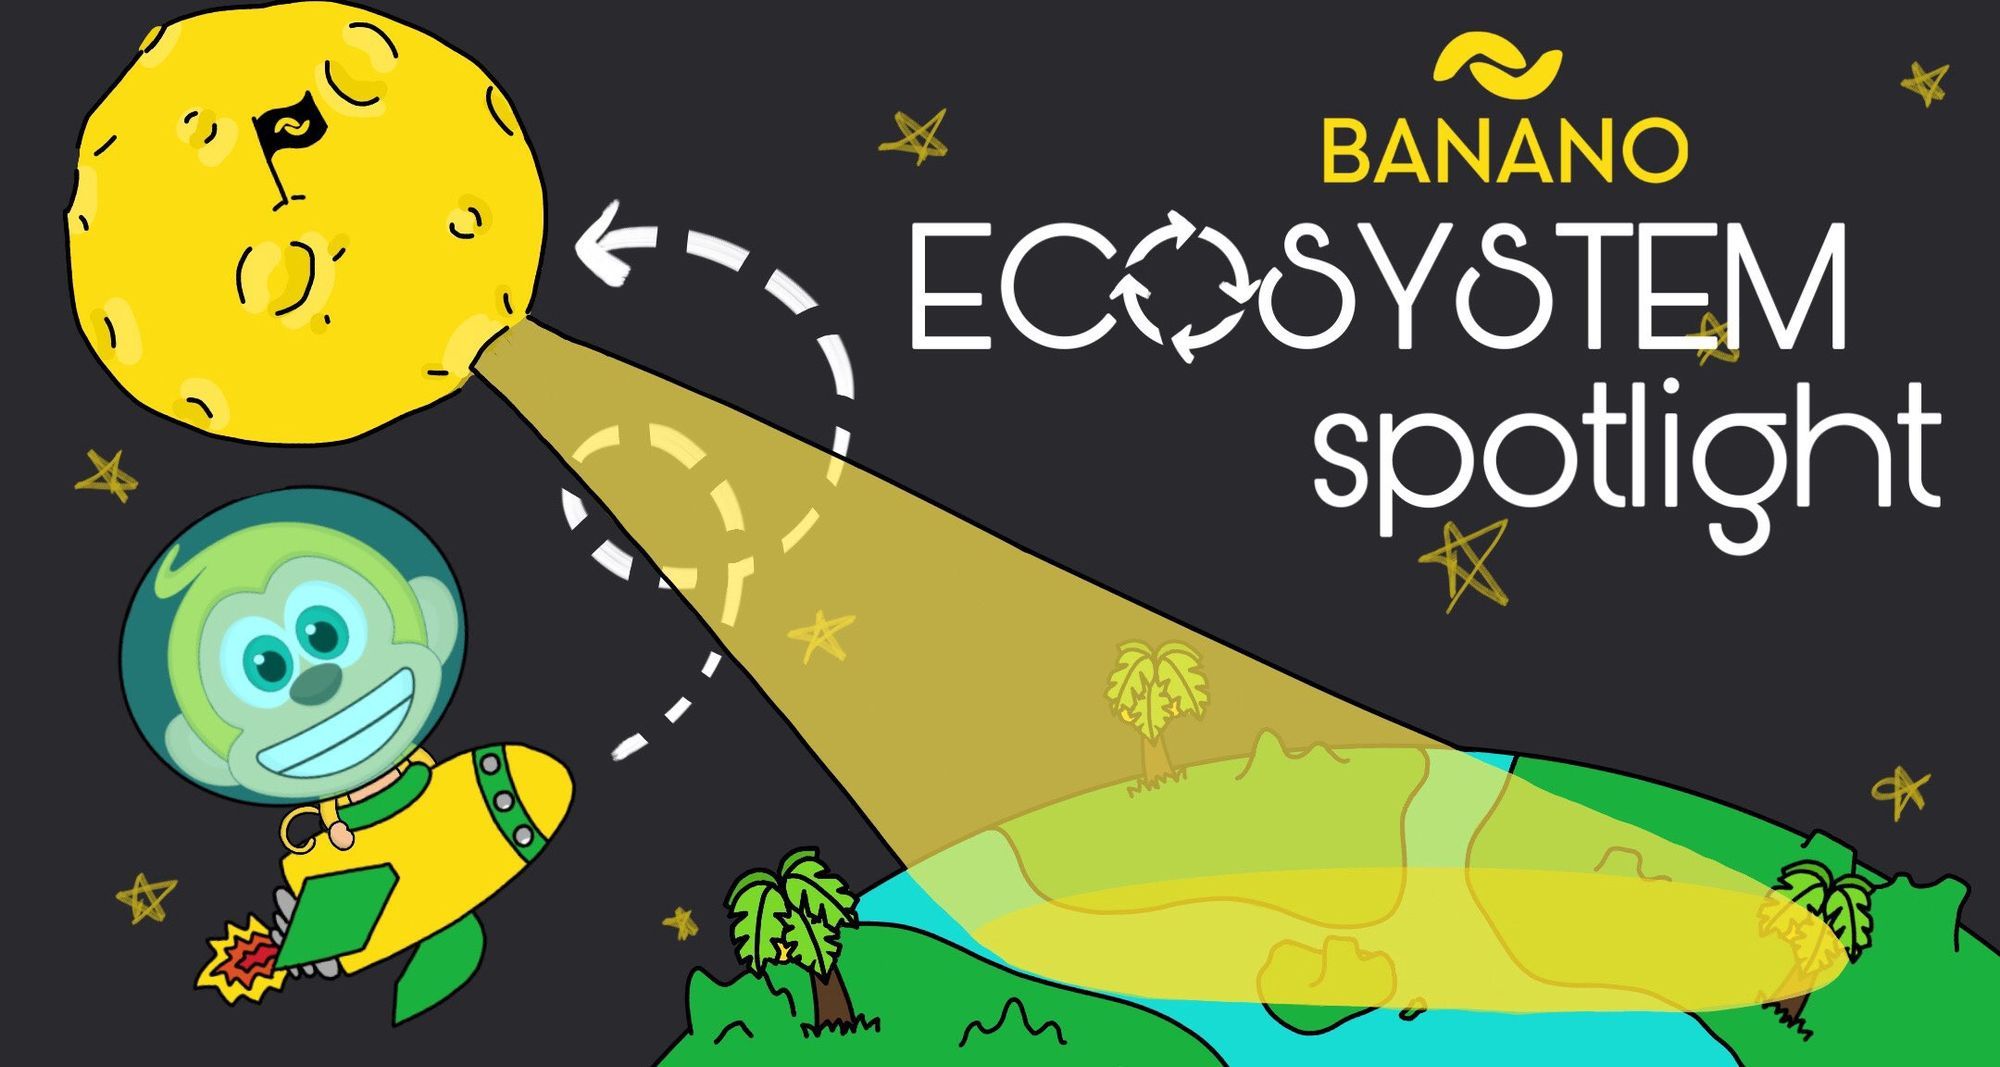 BANANO Ecosystem Spotlight #1: The BANANO Discord Chat Server